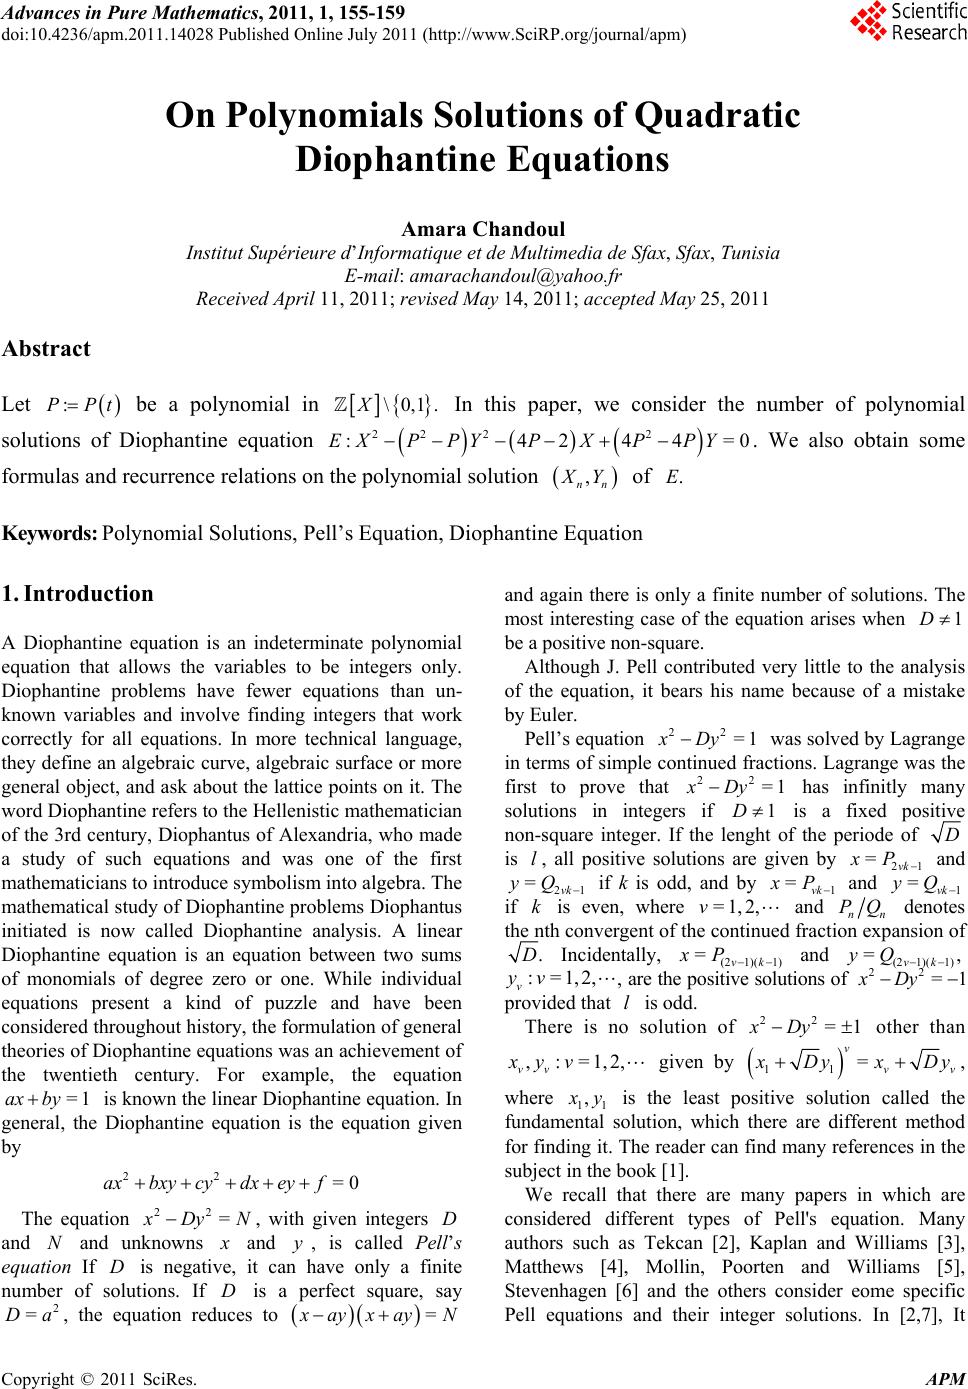 On Polynomials Solutions of Quadratic Diophantine Equations